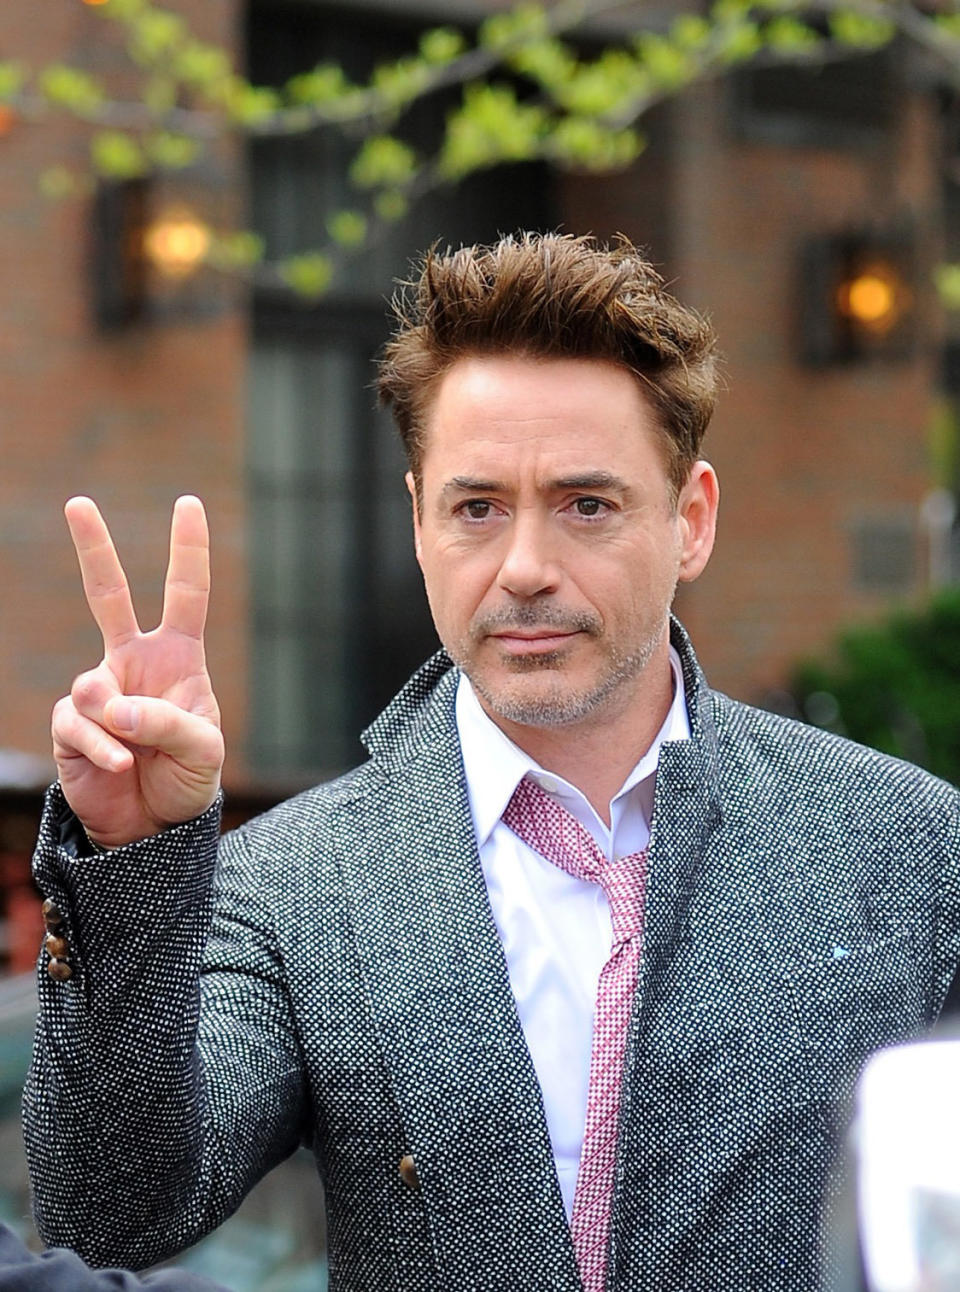 NEW YORK, NY - APRIL 30:  Robert Downey Jr. leaves Gemma restaurant on April 30, 2013 in New York City.  (Photo by Josiah Kamau/BuzzFoto/FilmMagic)